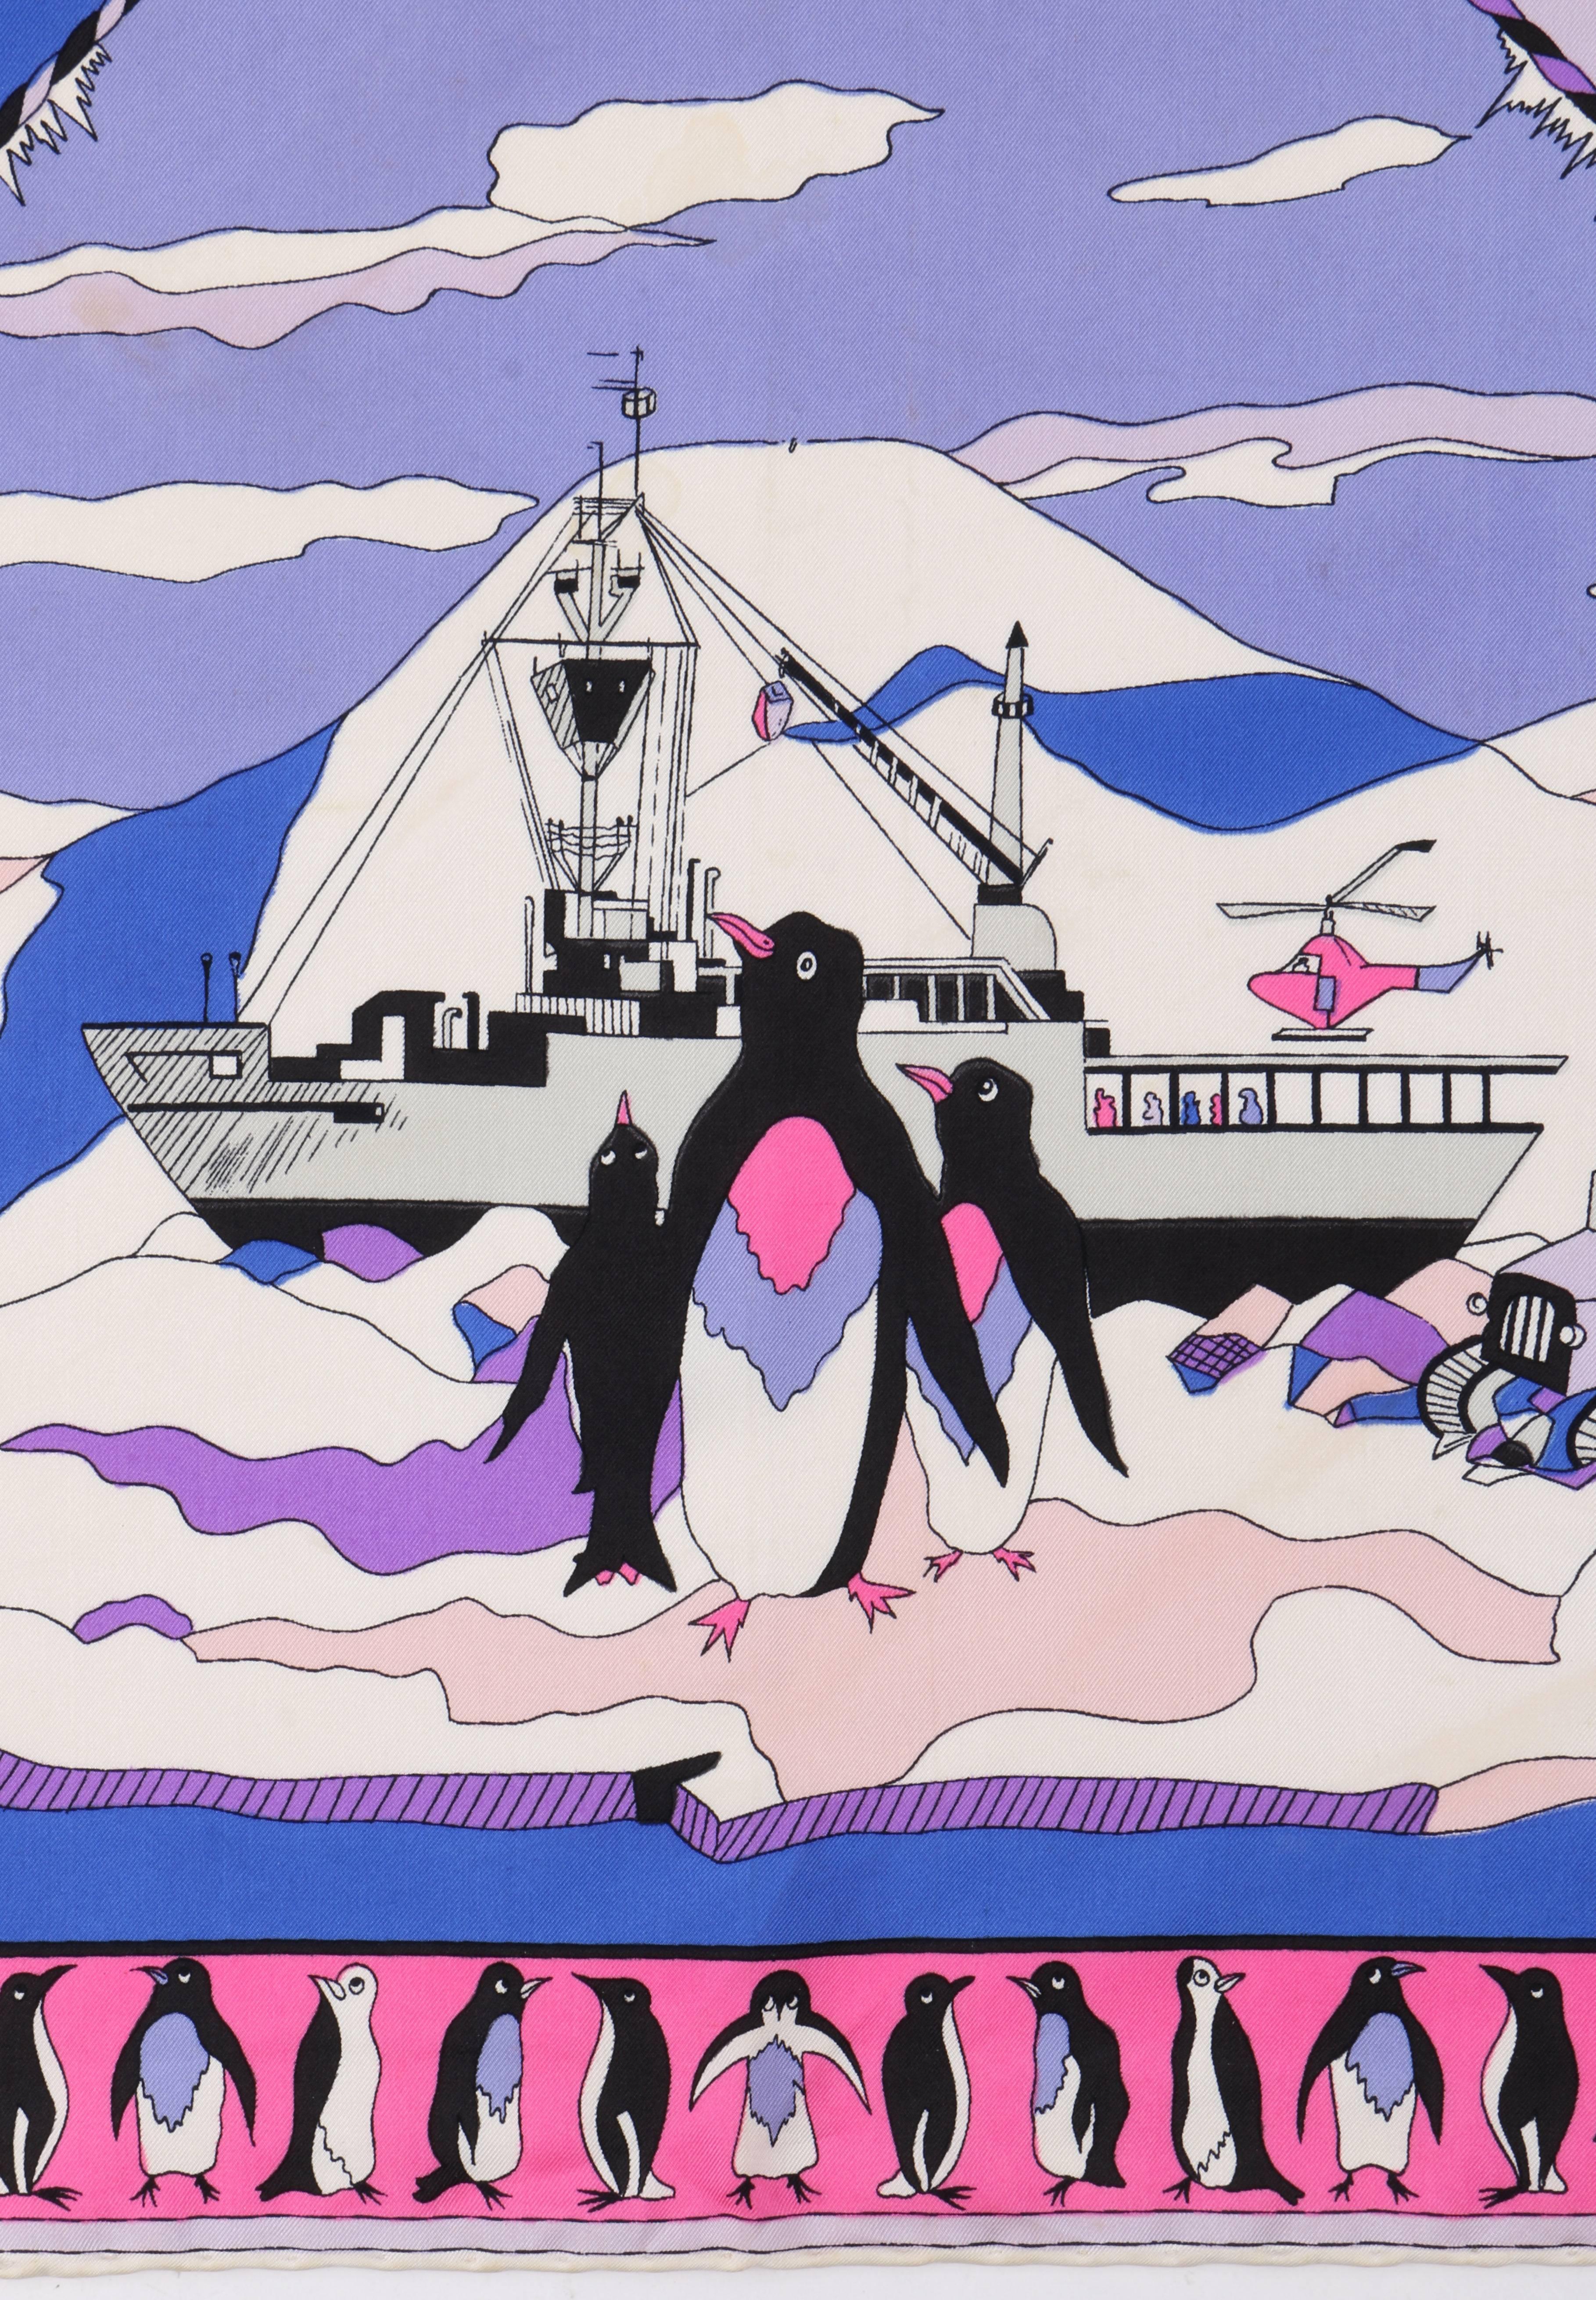 Vintage c.1960's Rare Emilio Pucci "The Antarctican Society" silk scarf. Penguin boarder print. Multi-color segmented Antarctica motif in shades of white, purple, blue, and pink. "The Antarctican Society" printed center front.